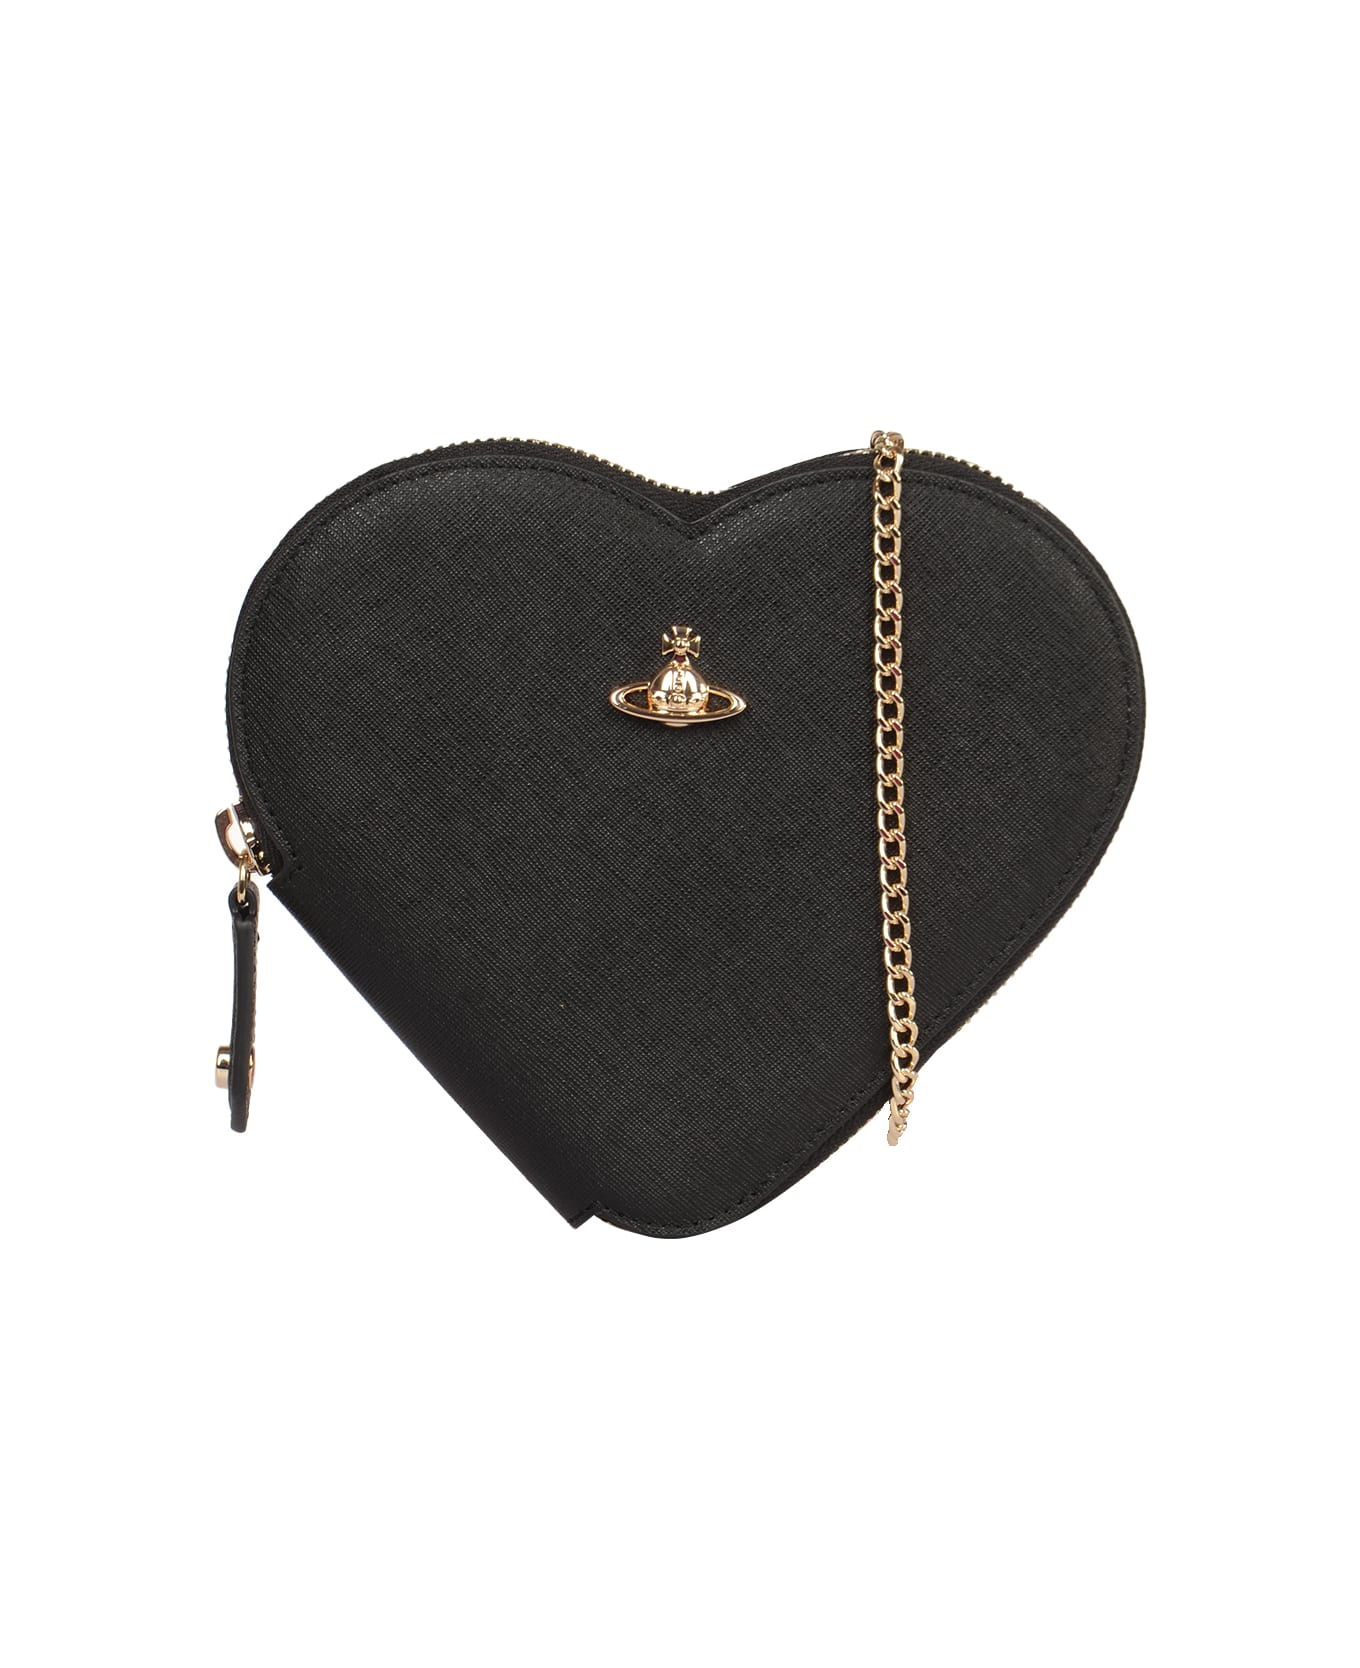 Vivienne Westwood New Heart Crossbody Bag - Black ショルダーバッグ